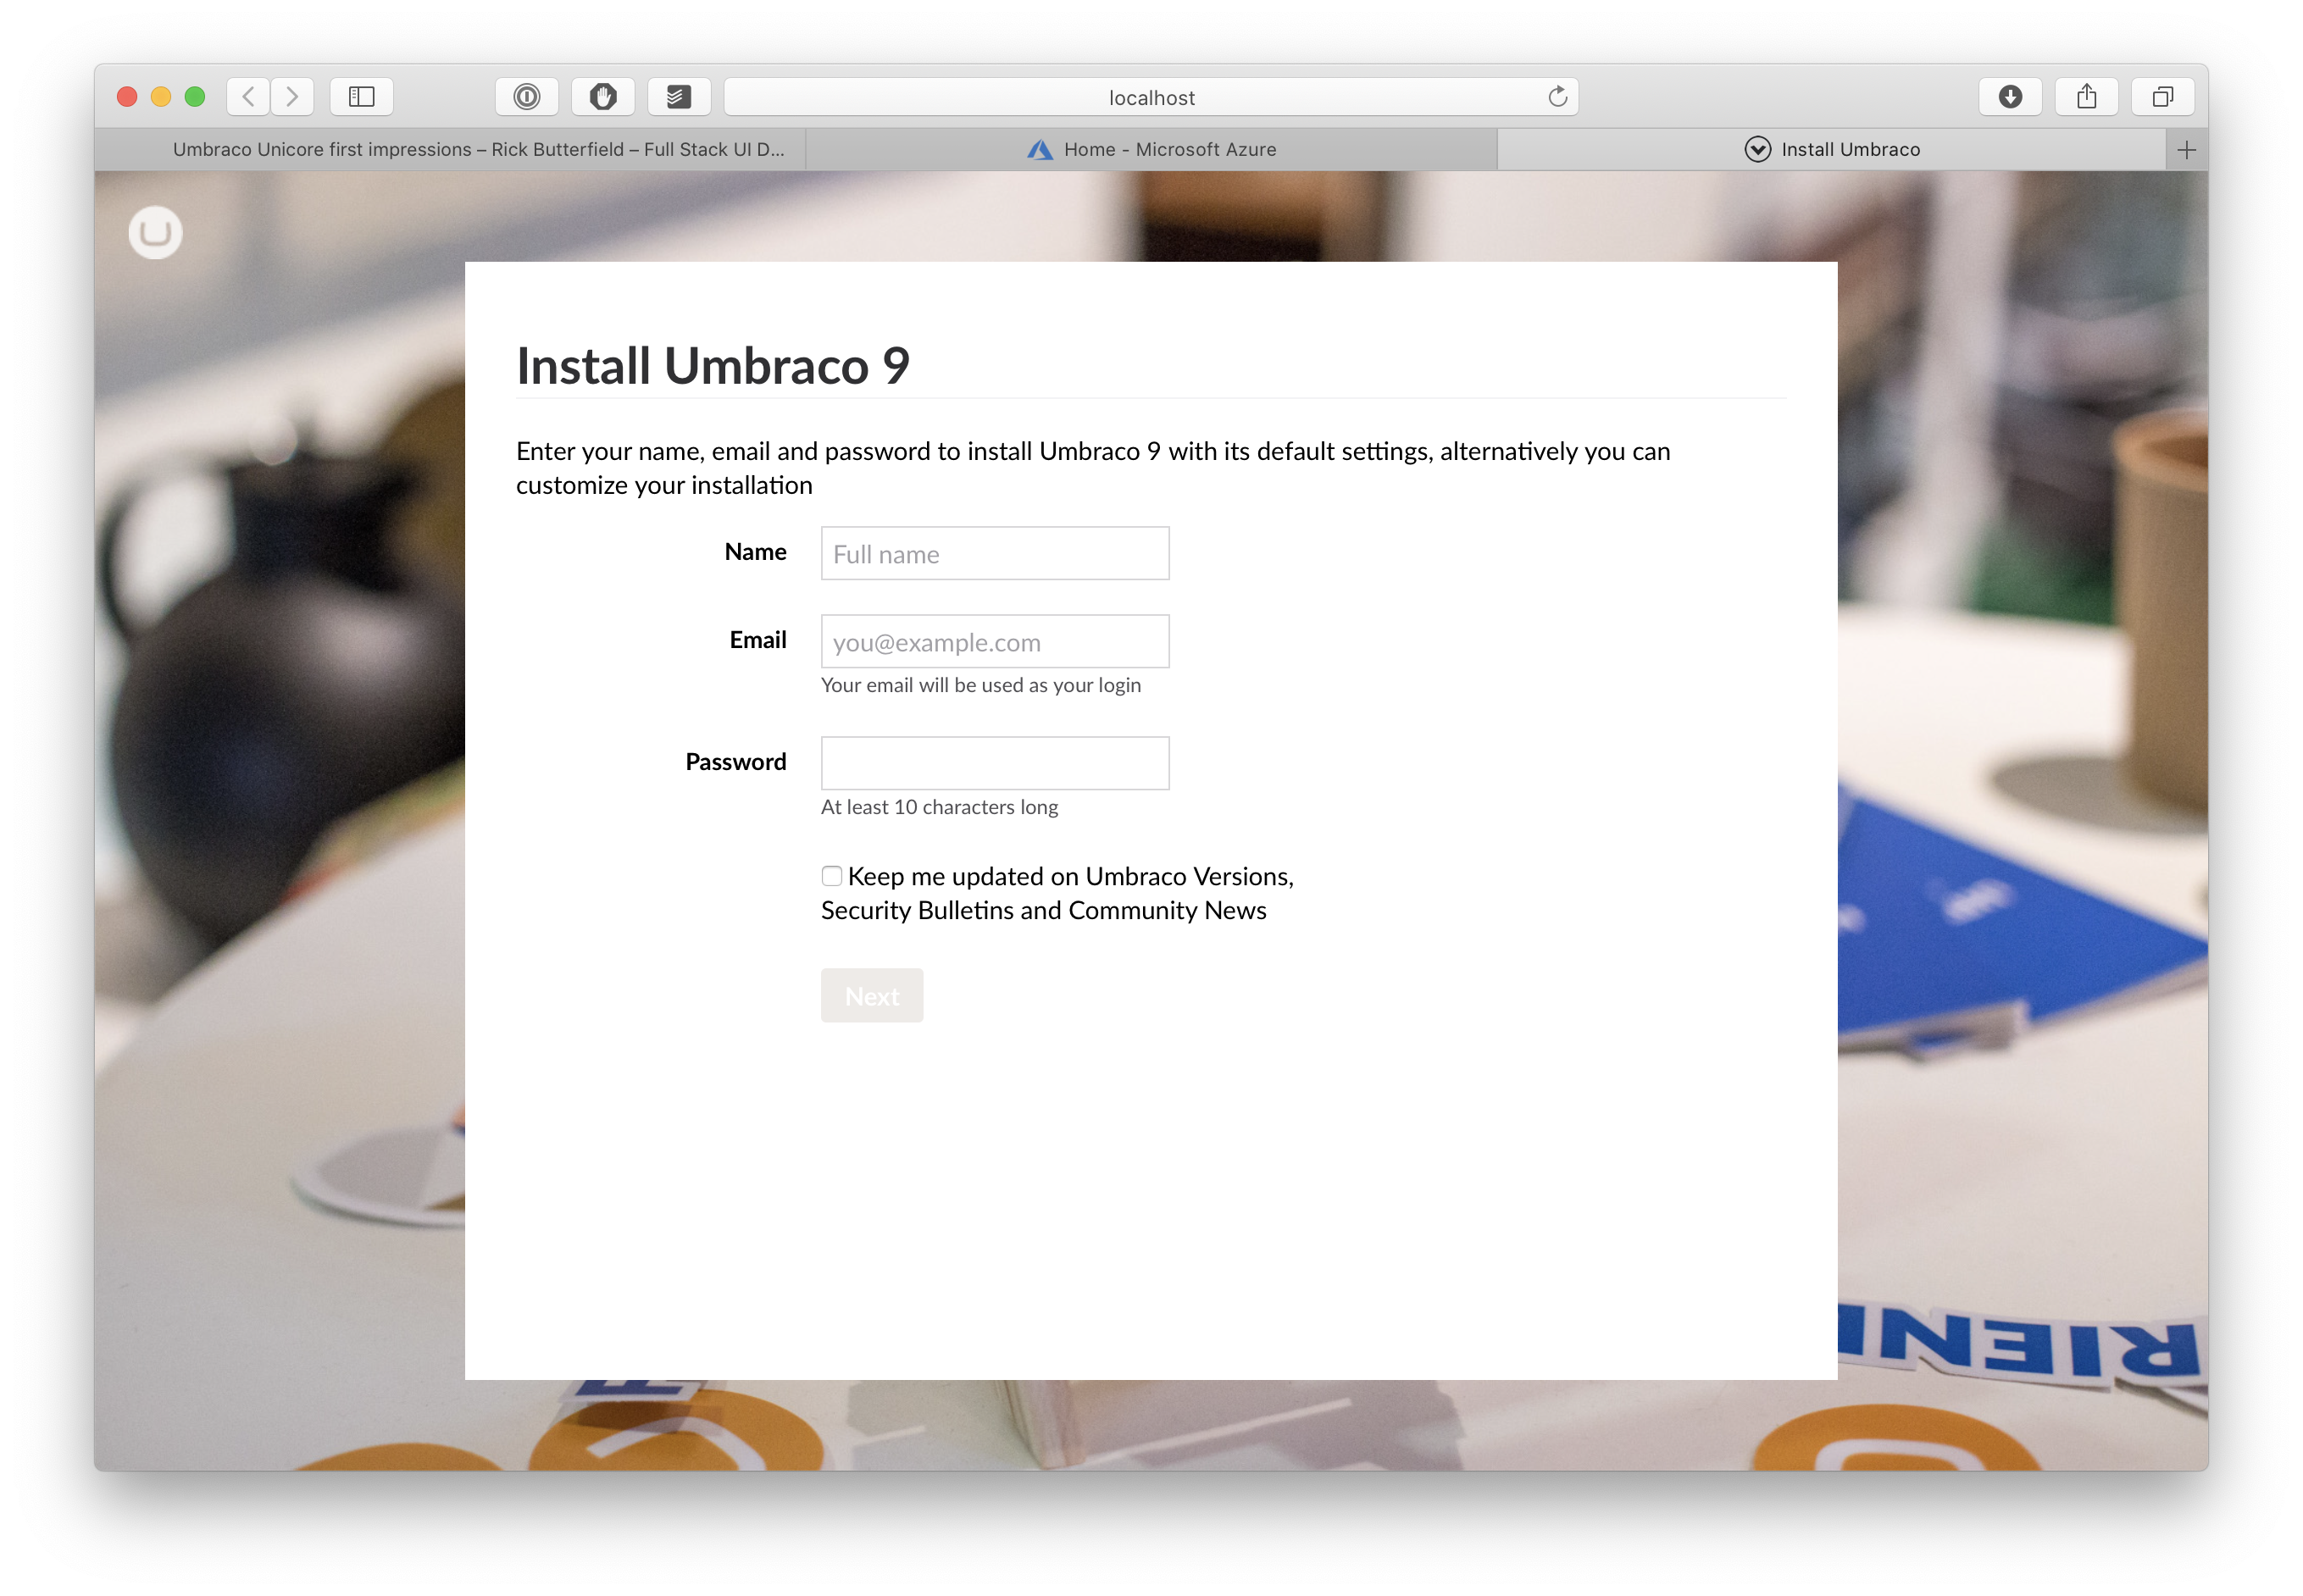 The Umbraco vNext installer screen running on macOS